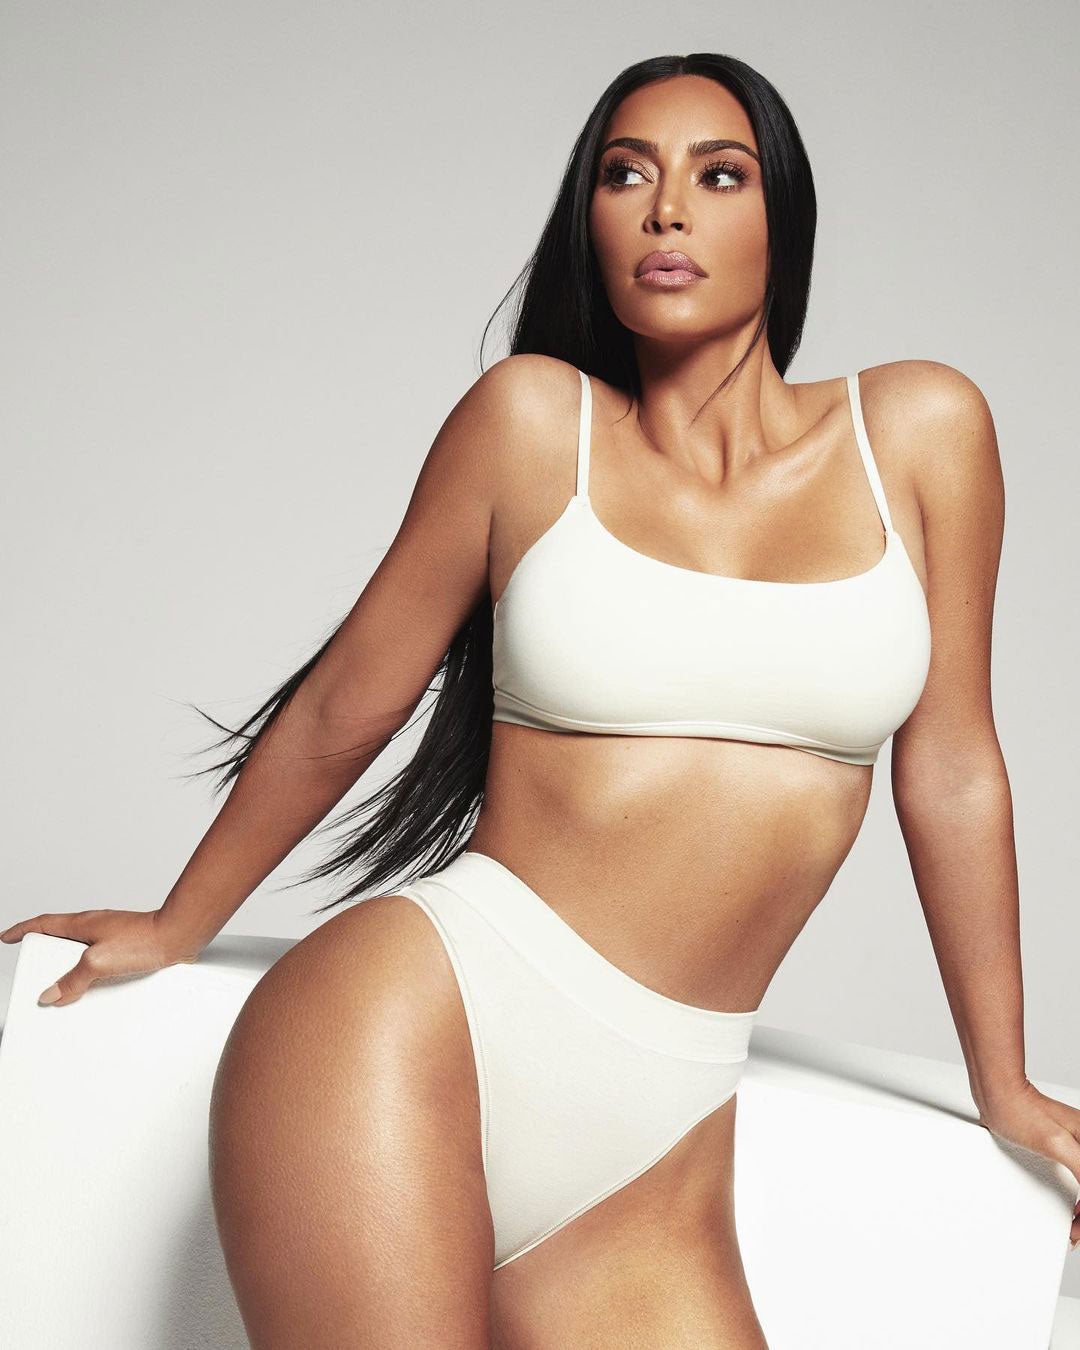 SKIMS - Kim Kardashian West wears the Bandeau and Boyshort